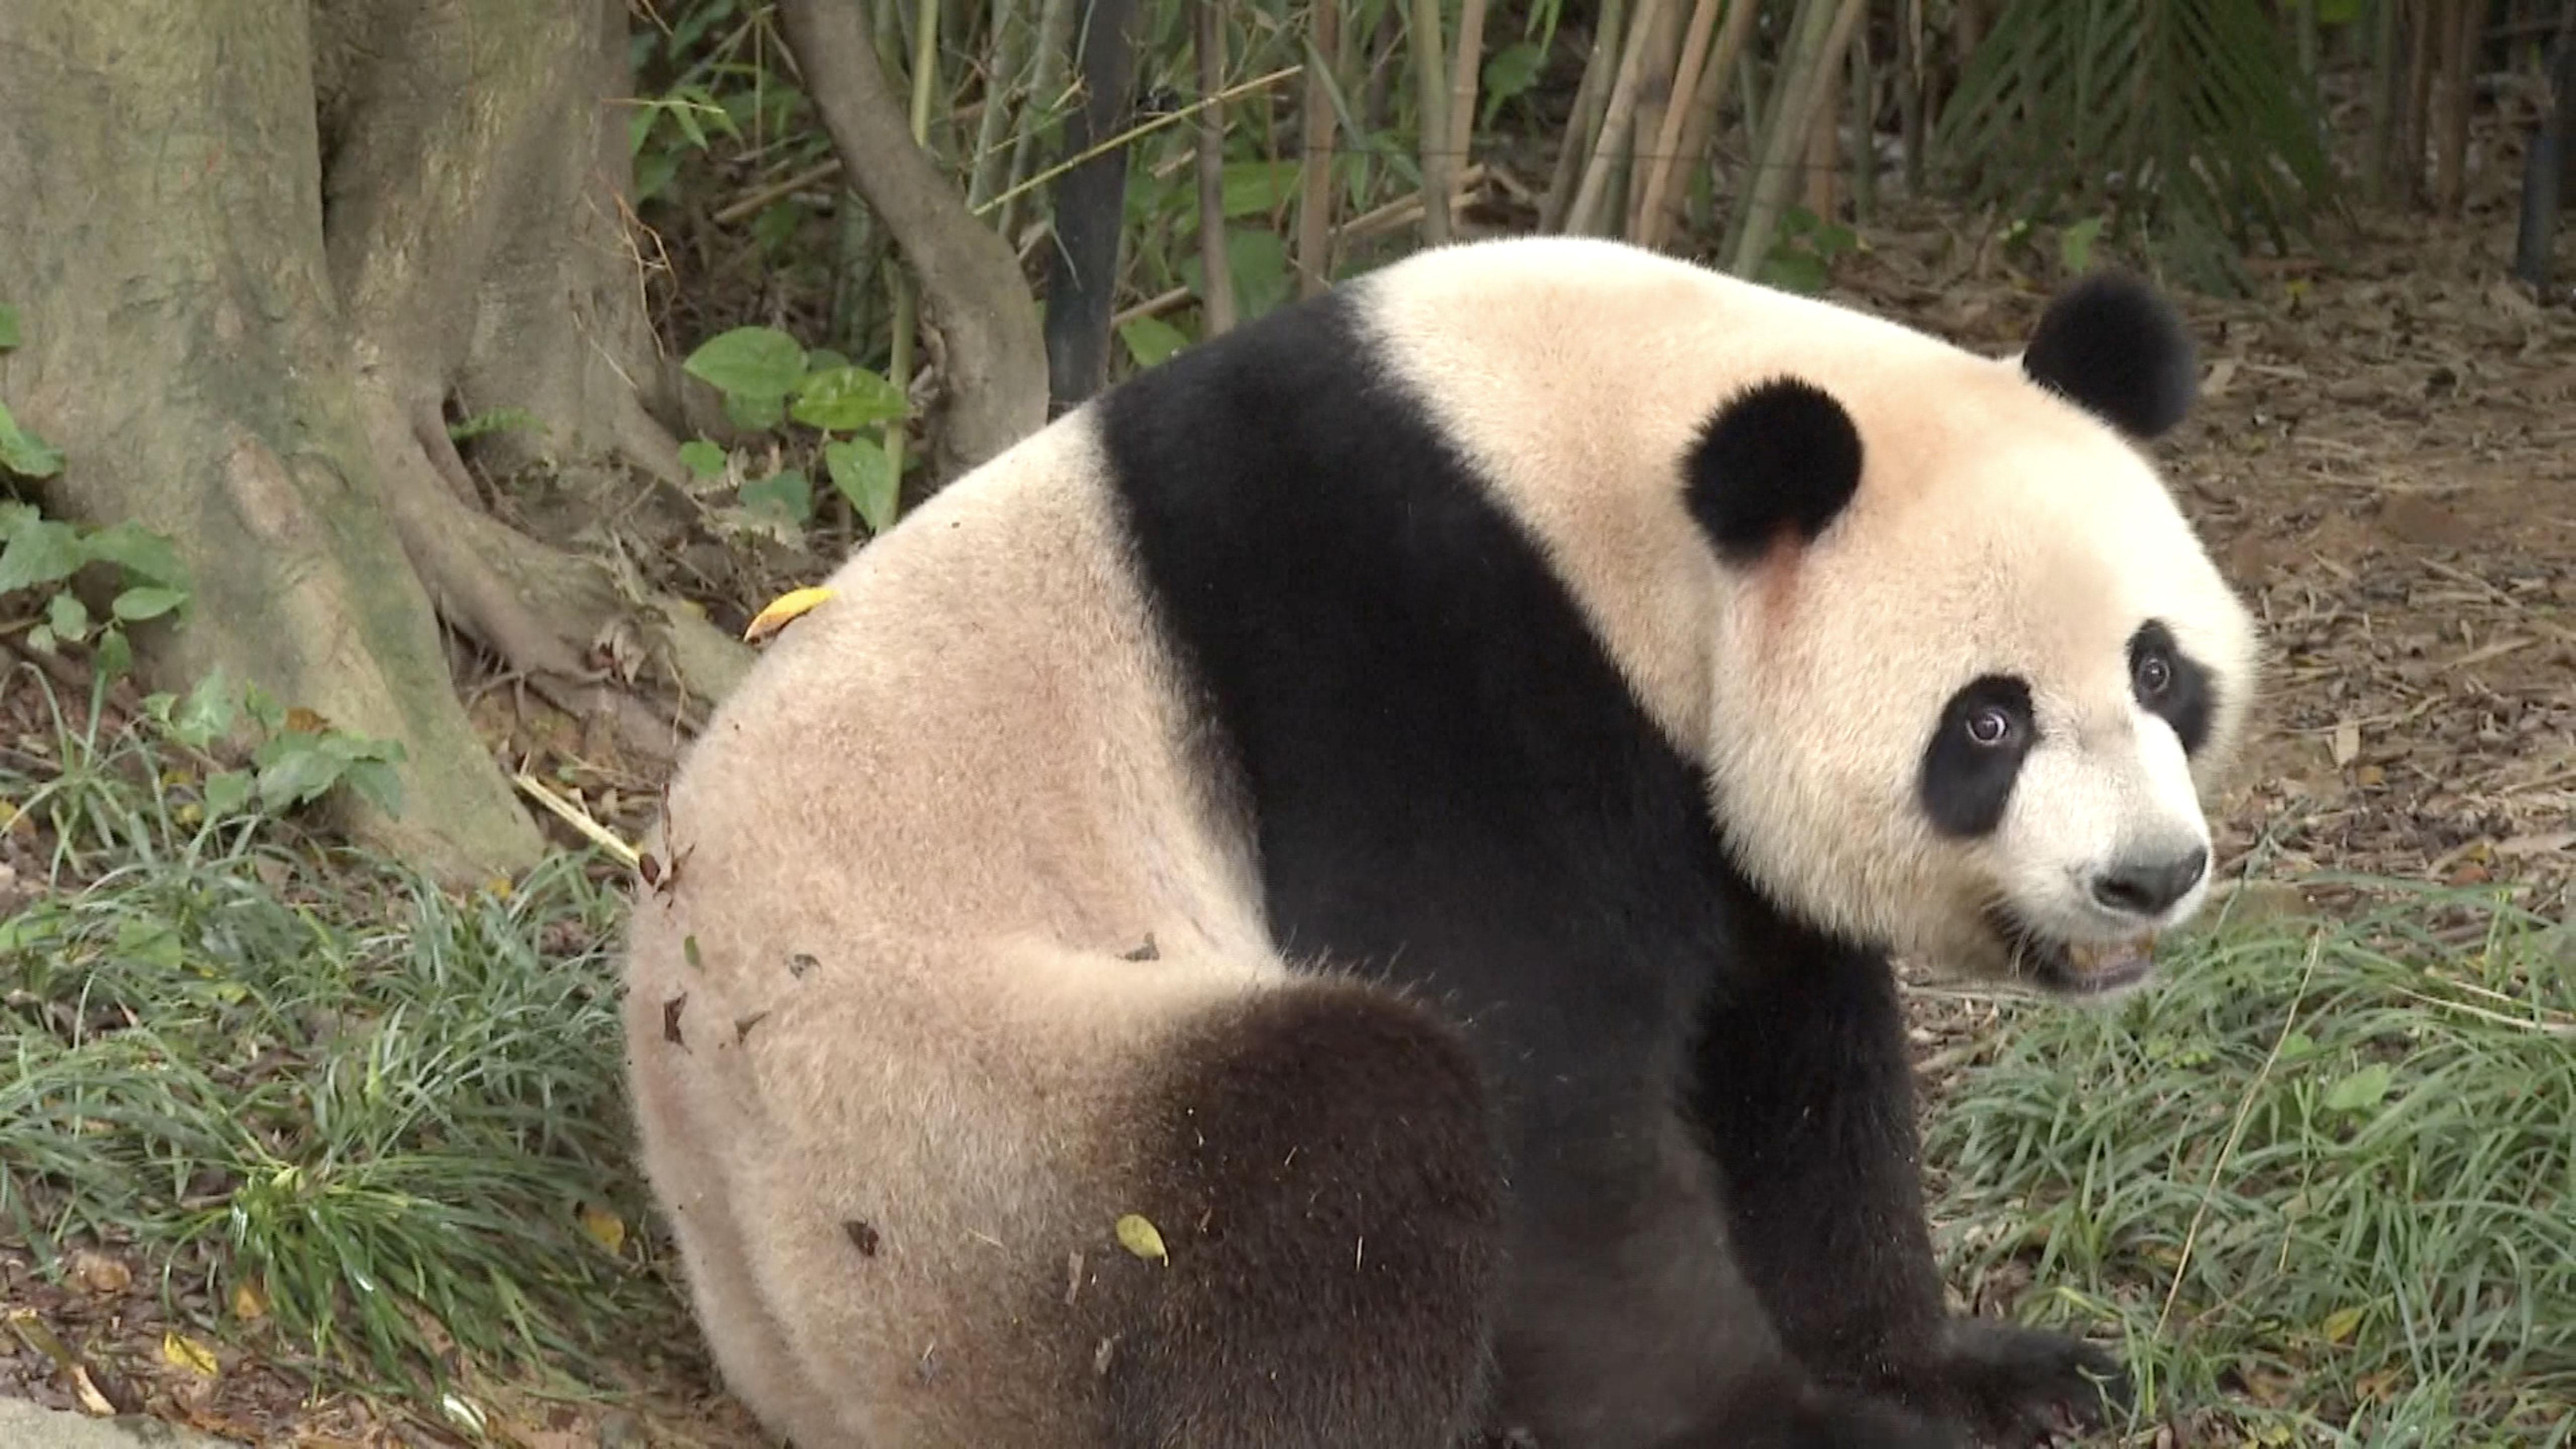 Panda triplets start living separately at S. China park - CGTN